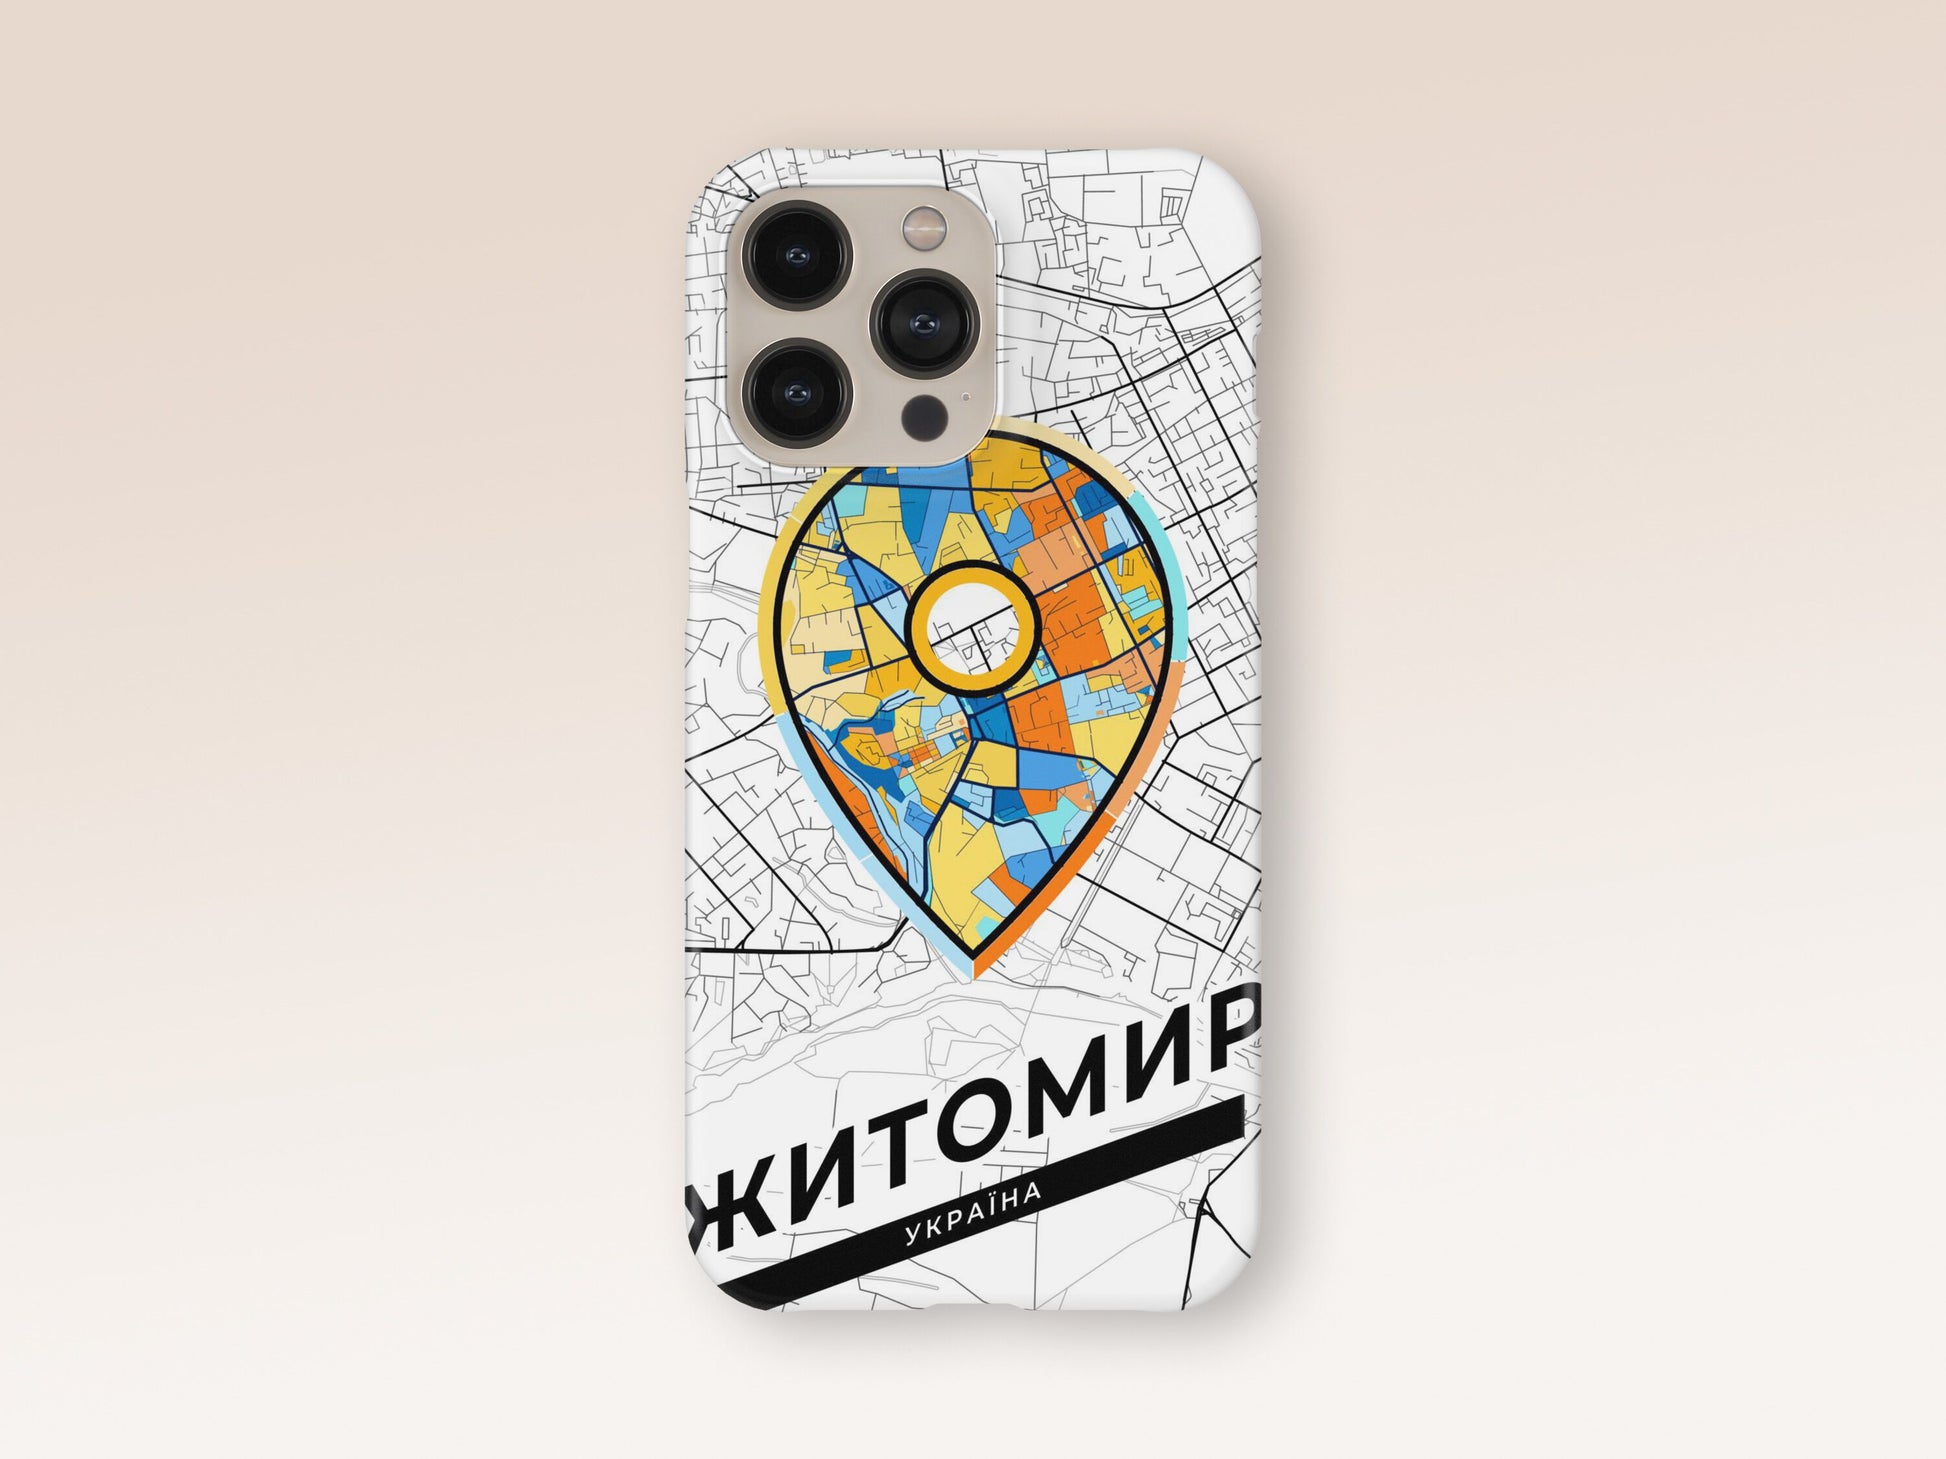 Zhytomyr Ukraine slim phone case with colorful icon 1